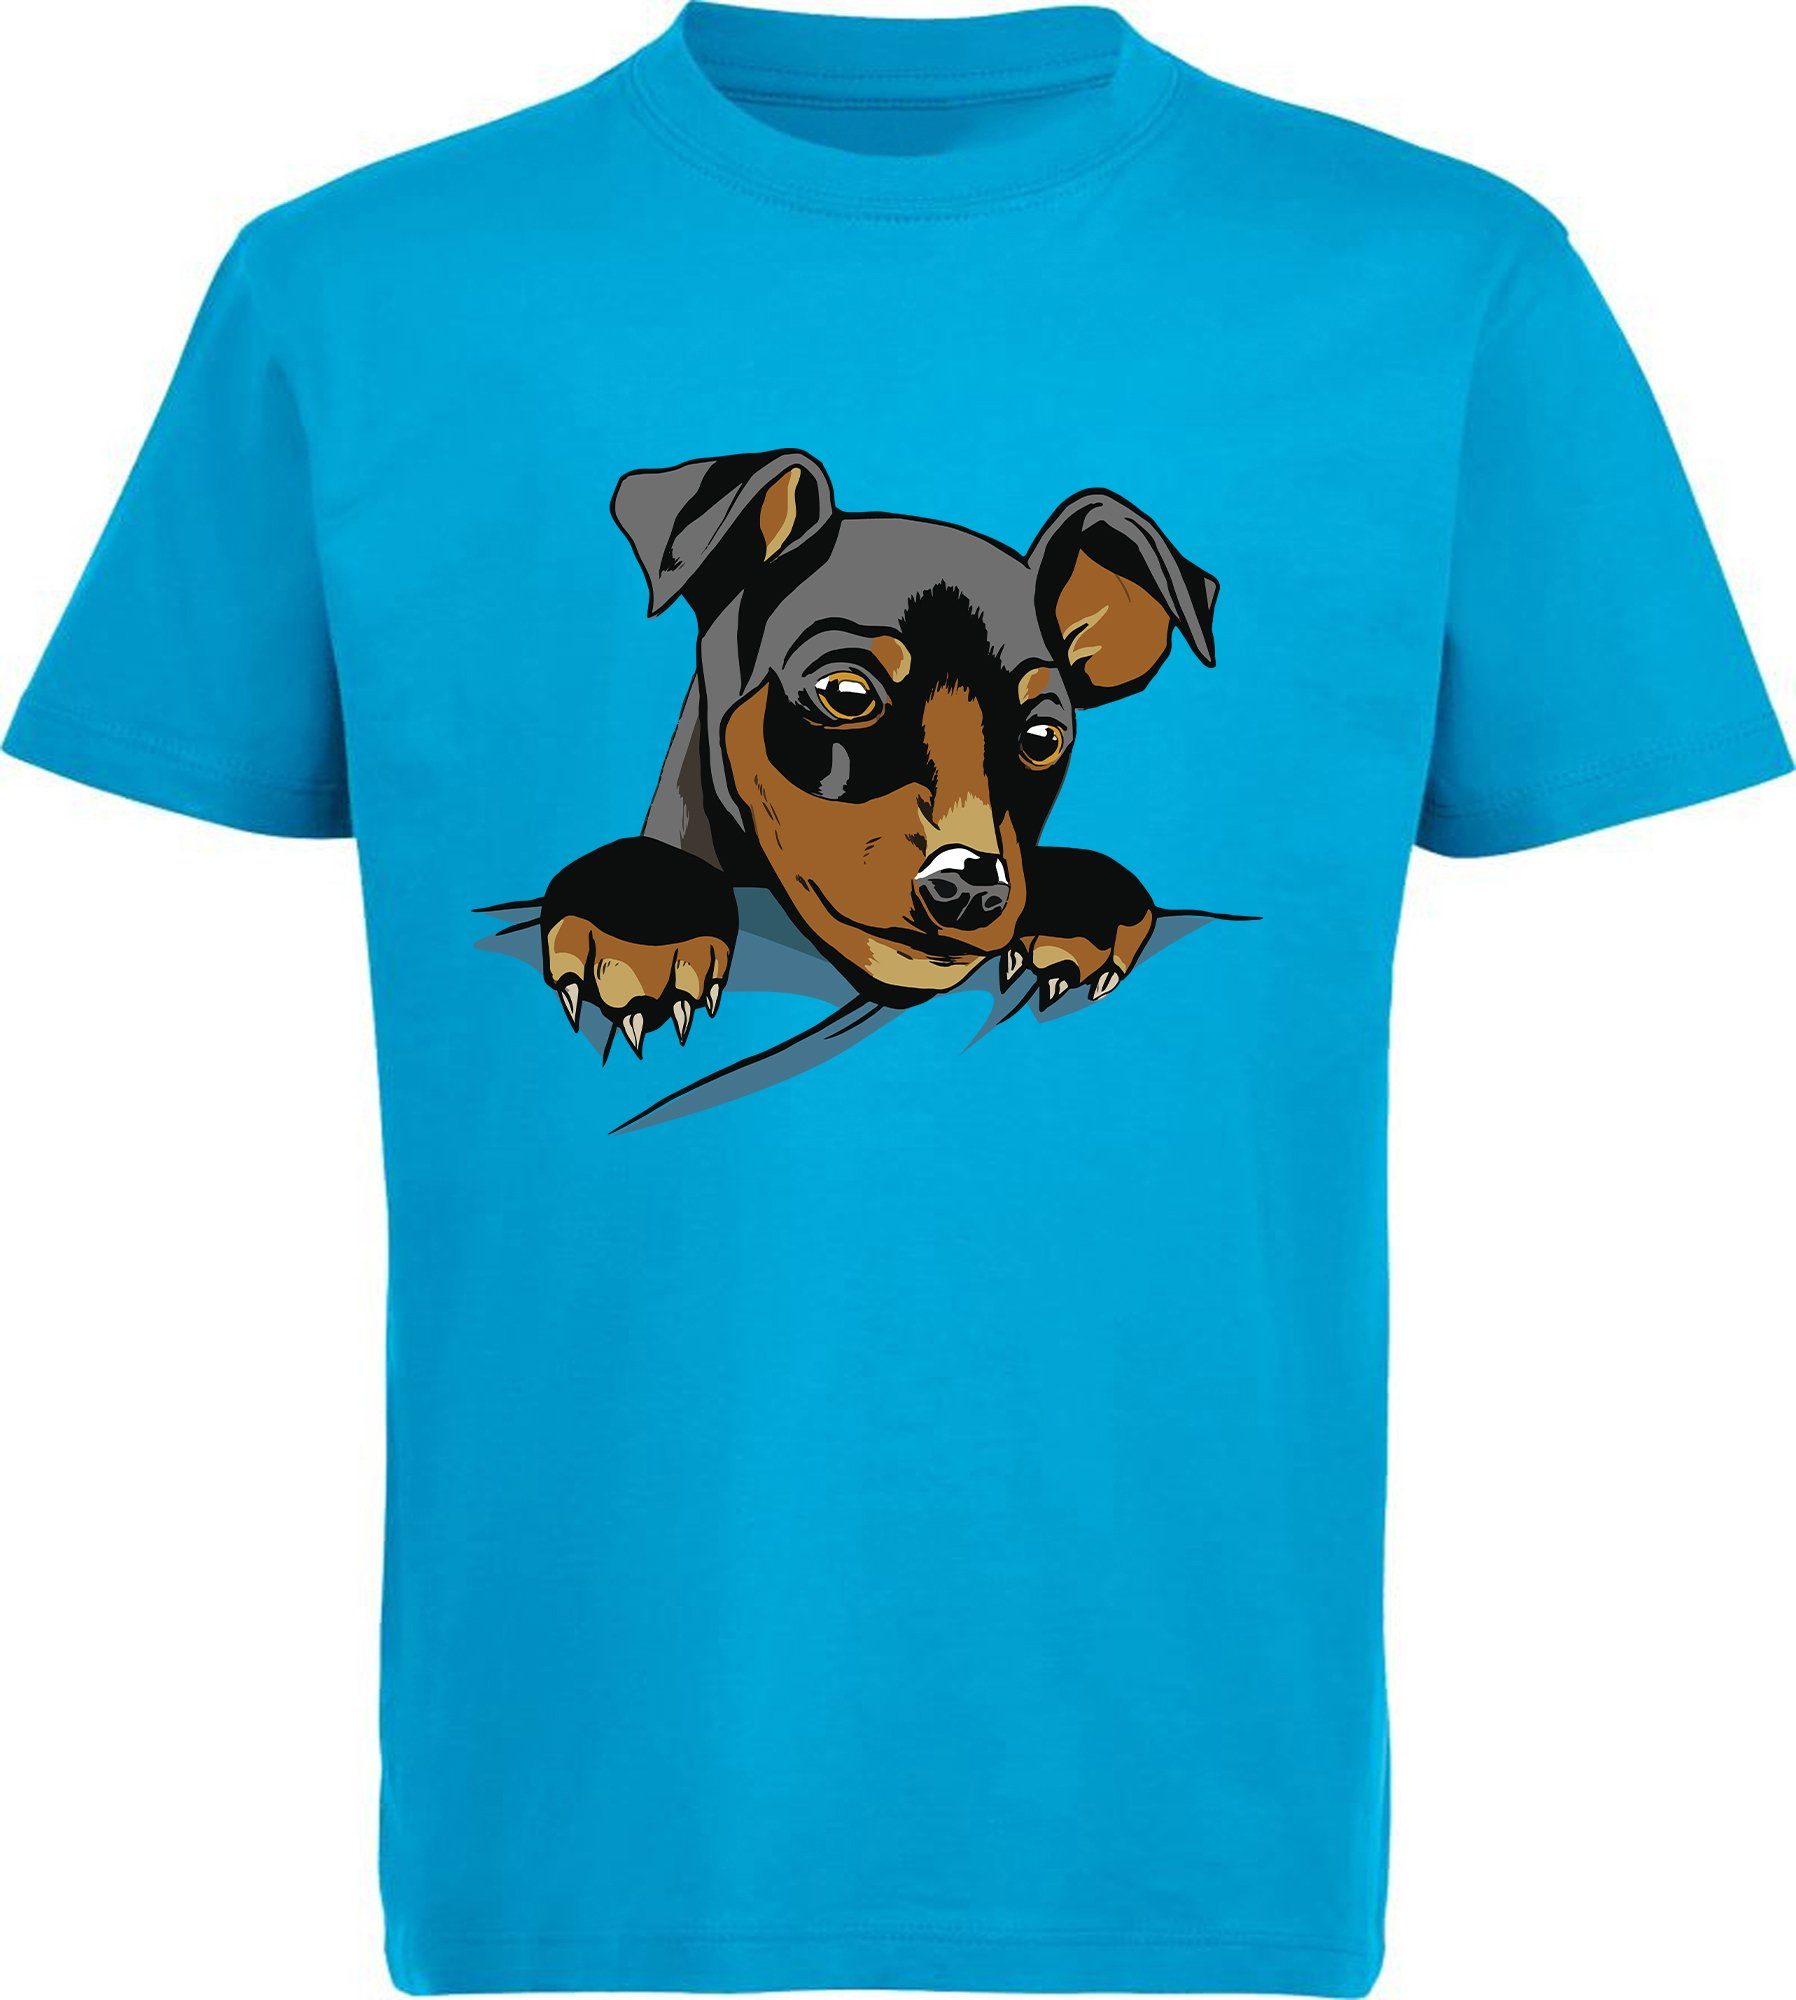 MyDesign24 Print-Shirt bedrucktes mit T-Shirt Baumwollshirt Süßer Kinder Hunde - Aufdruck, Welpe blau i227 aqua